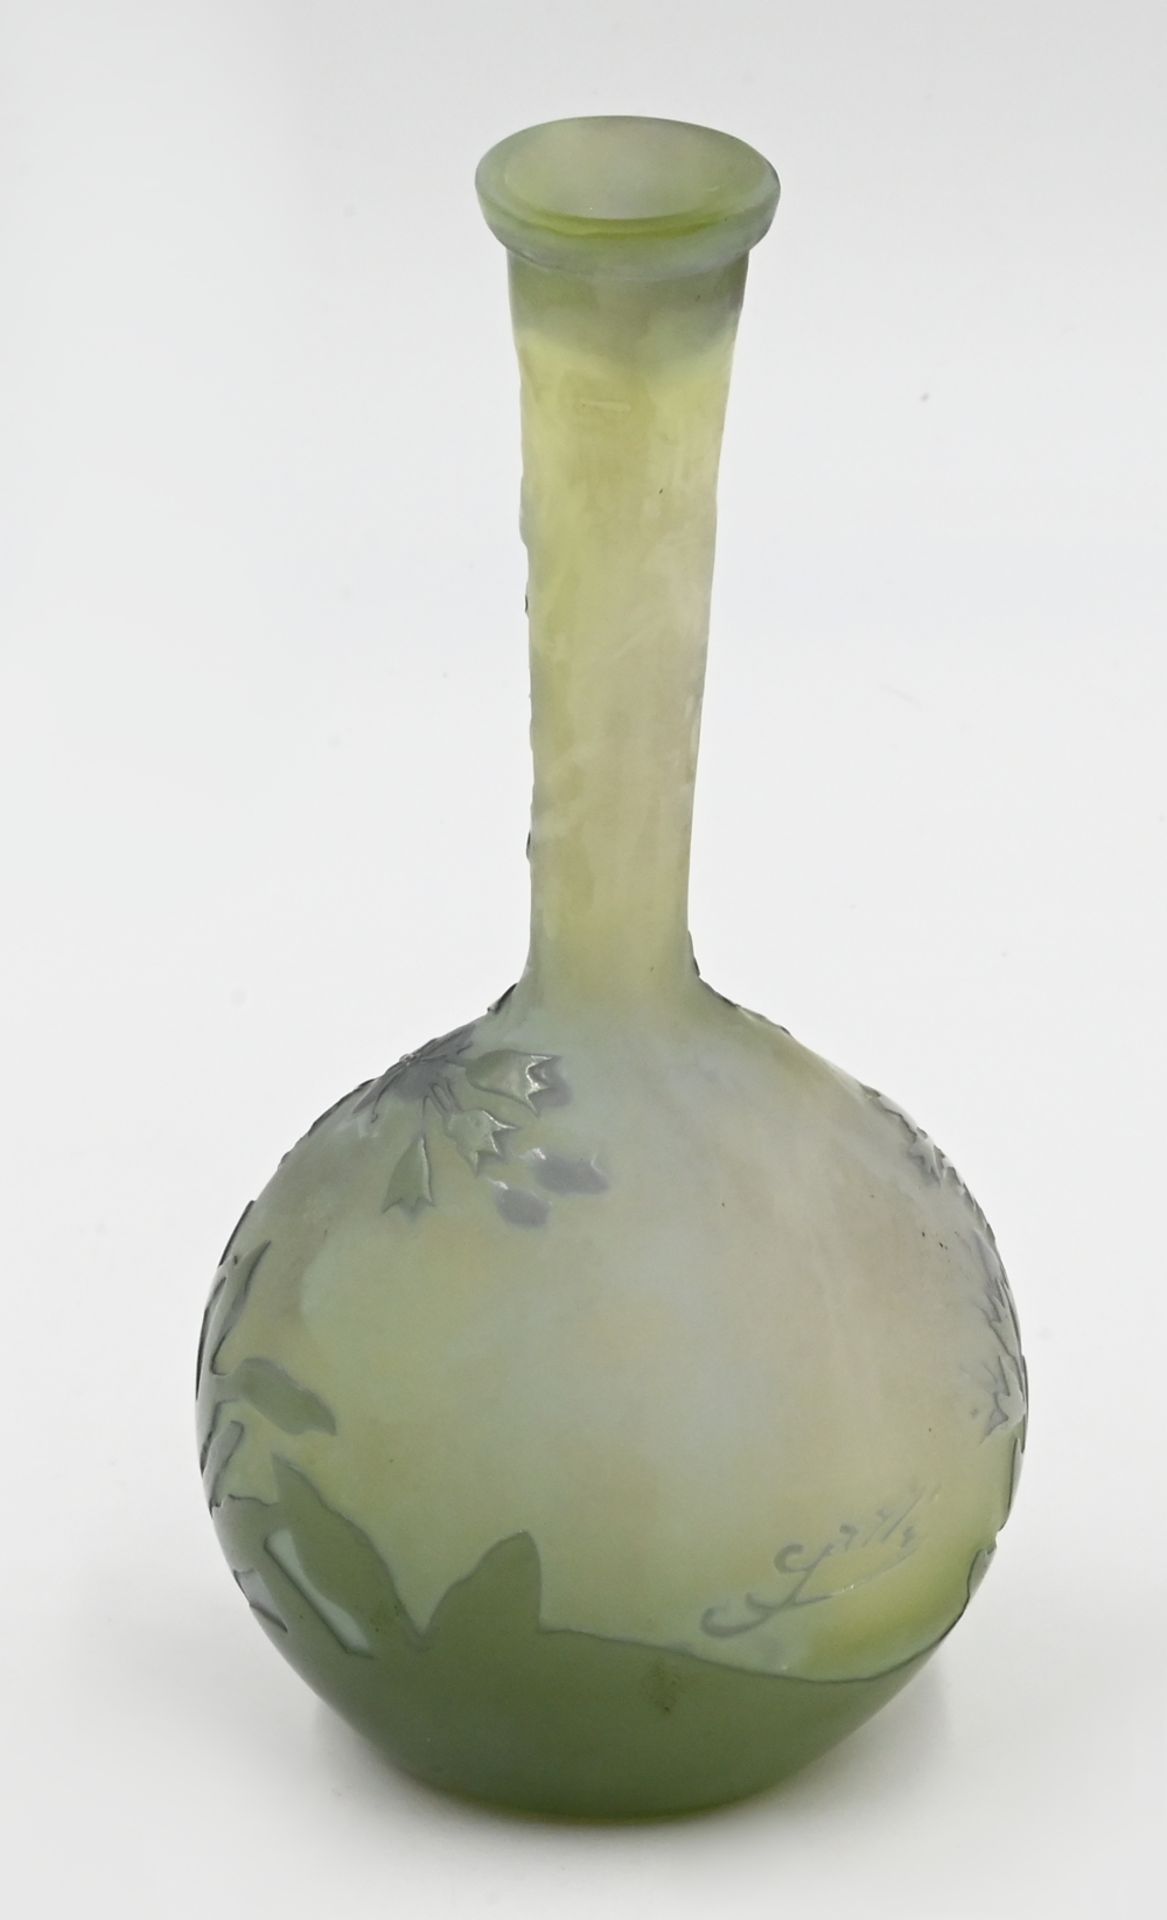 1 Solifiore Glas "Glockenblumen" wohl Anfang 20. Jh. rücks. bez. GALLÉ (wohl Émile Gallé 1846 Nancy- - Image 2 of 3